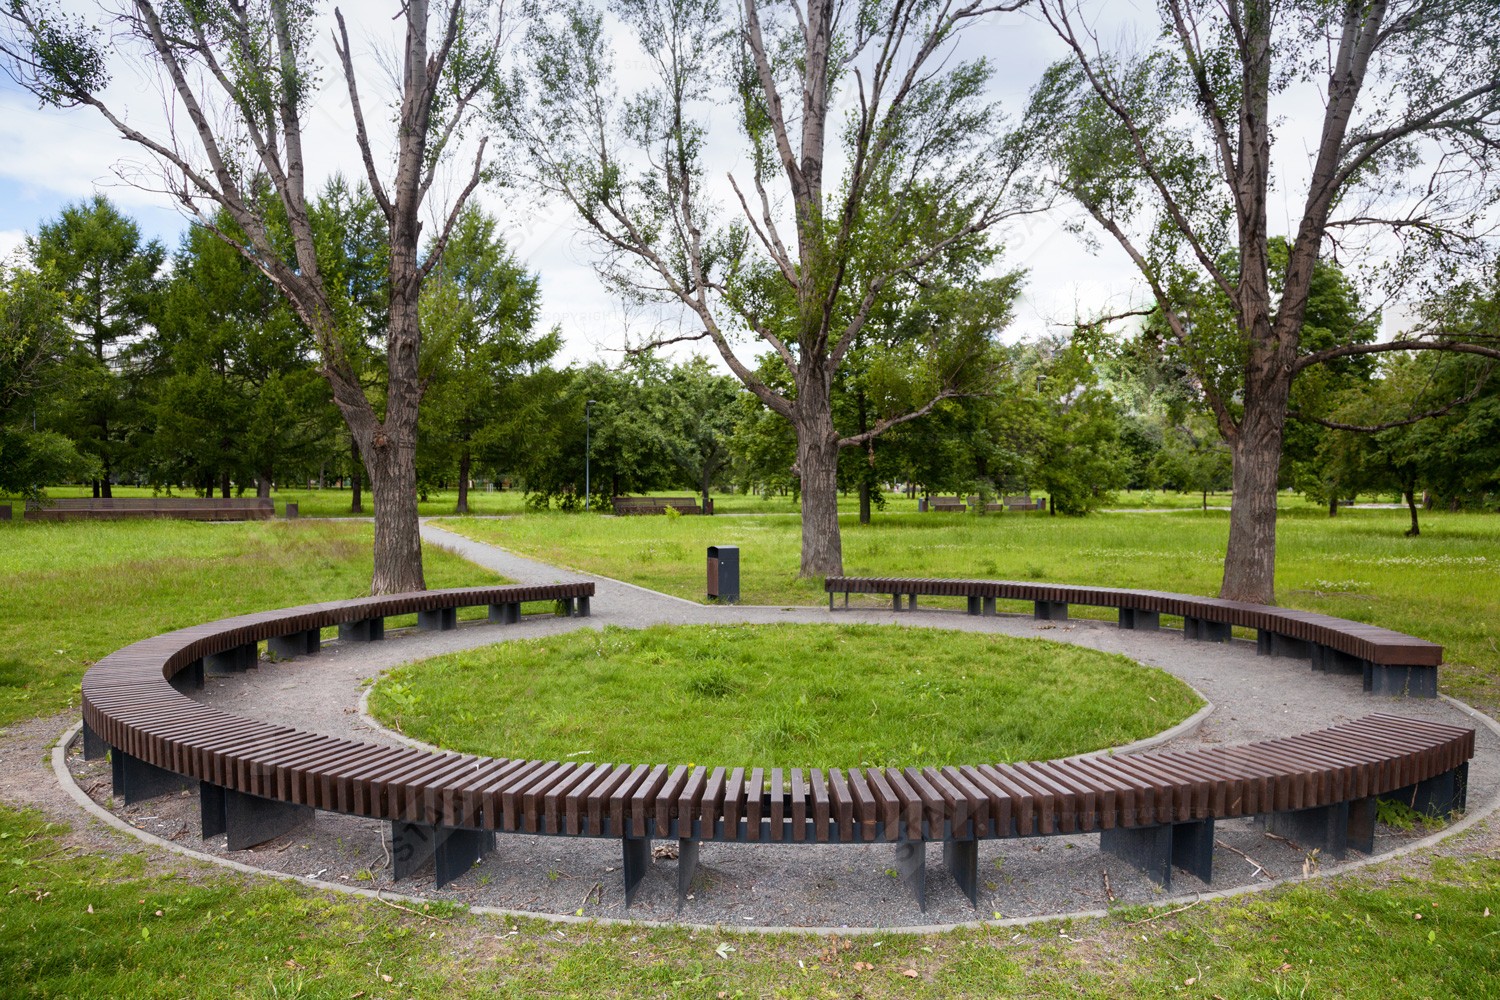 Massive Circular Wraparound Bench in Park